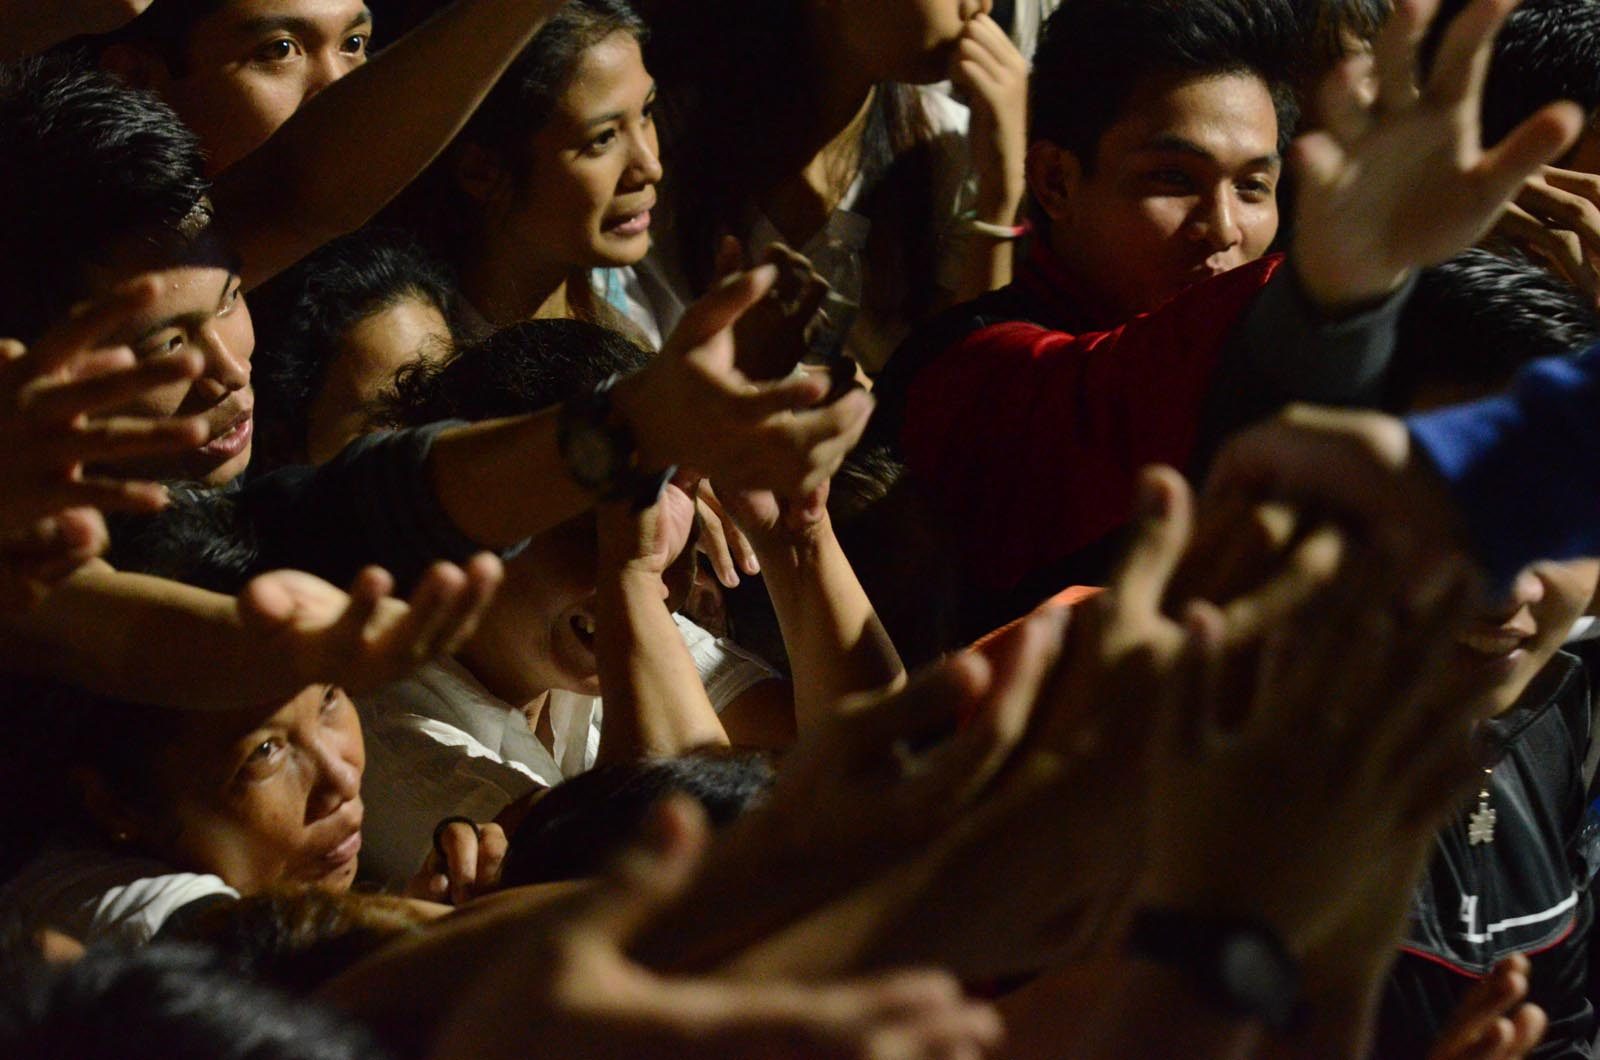 Iglesia ni Cristo rally allowed in Manila until September 4